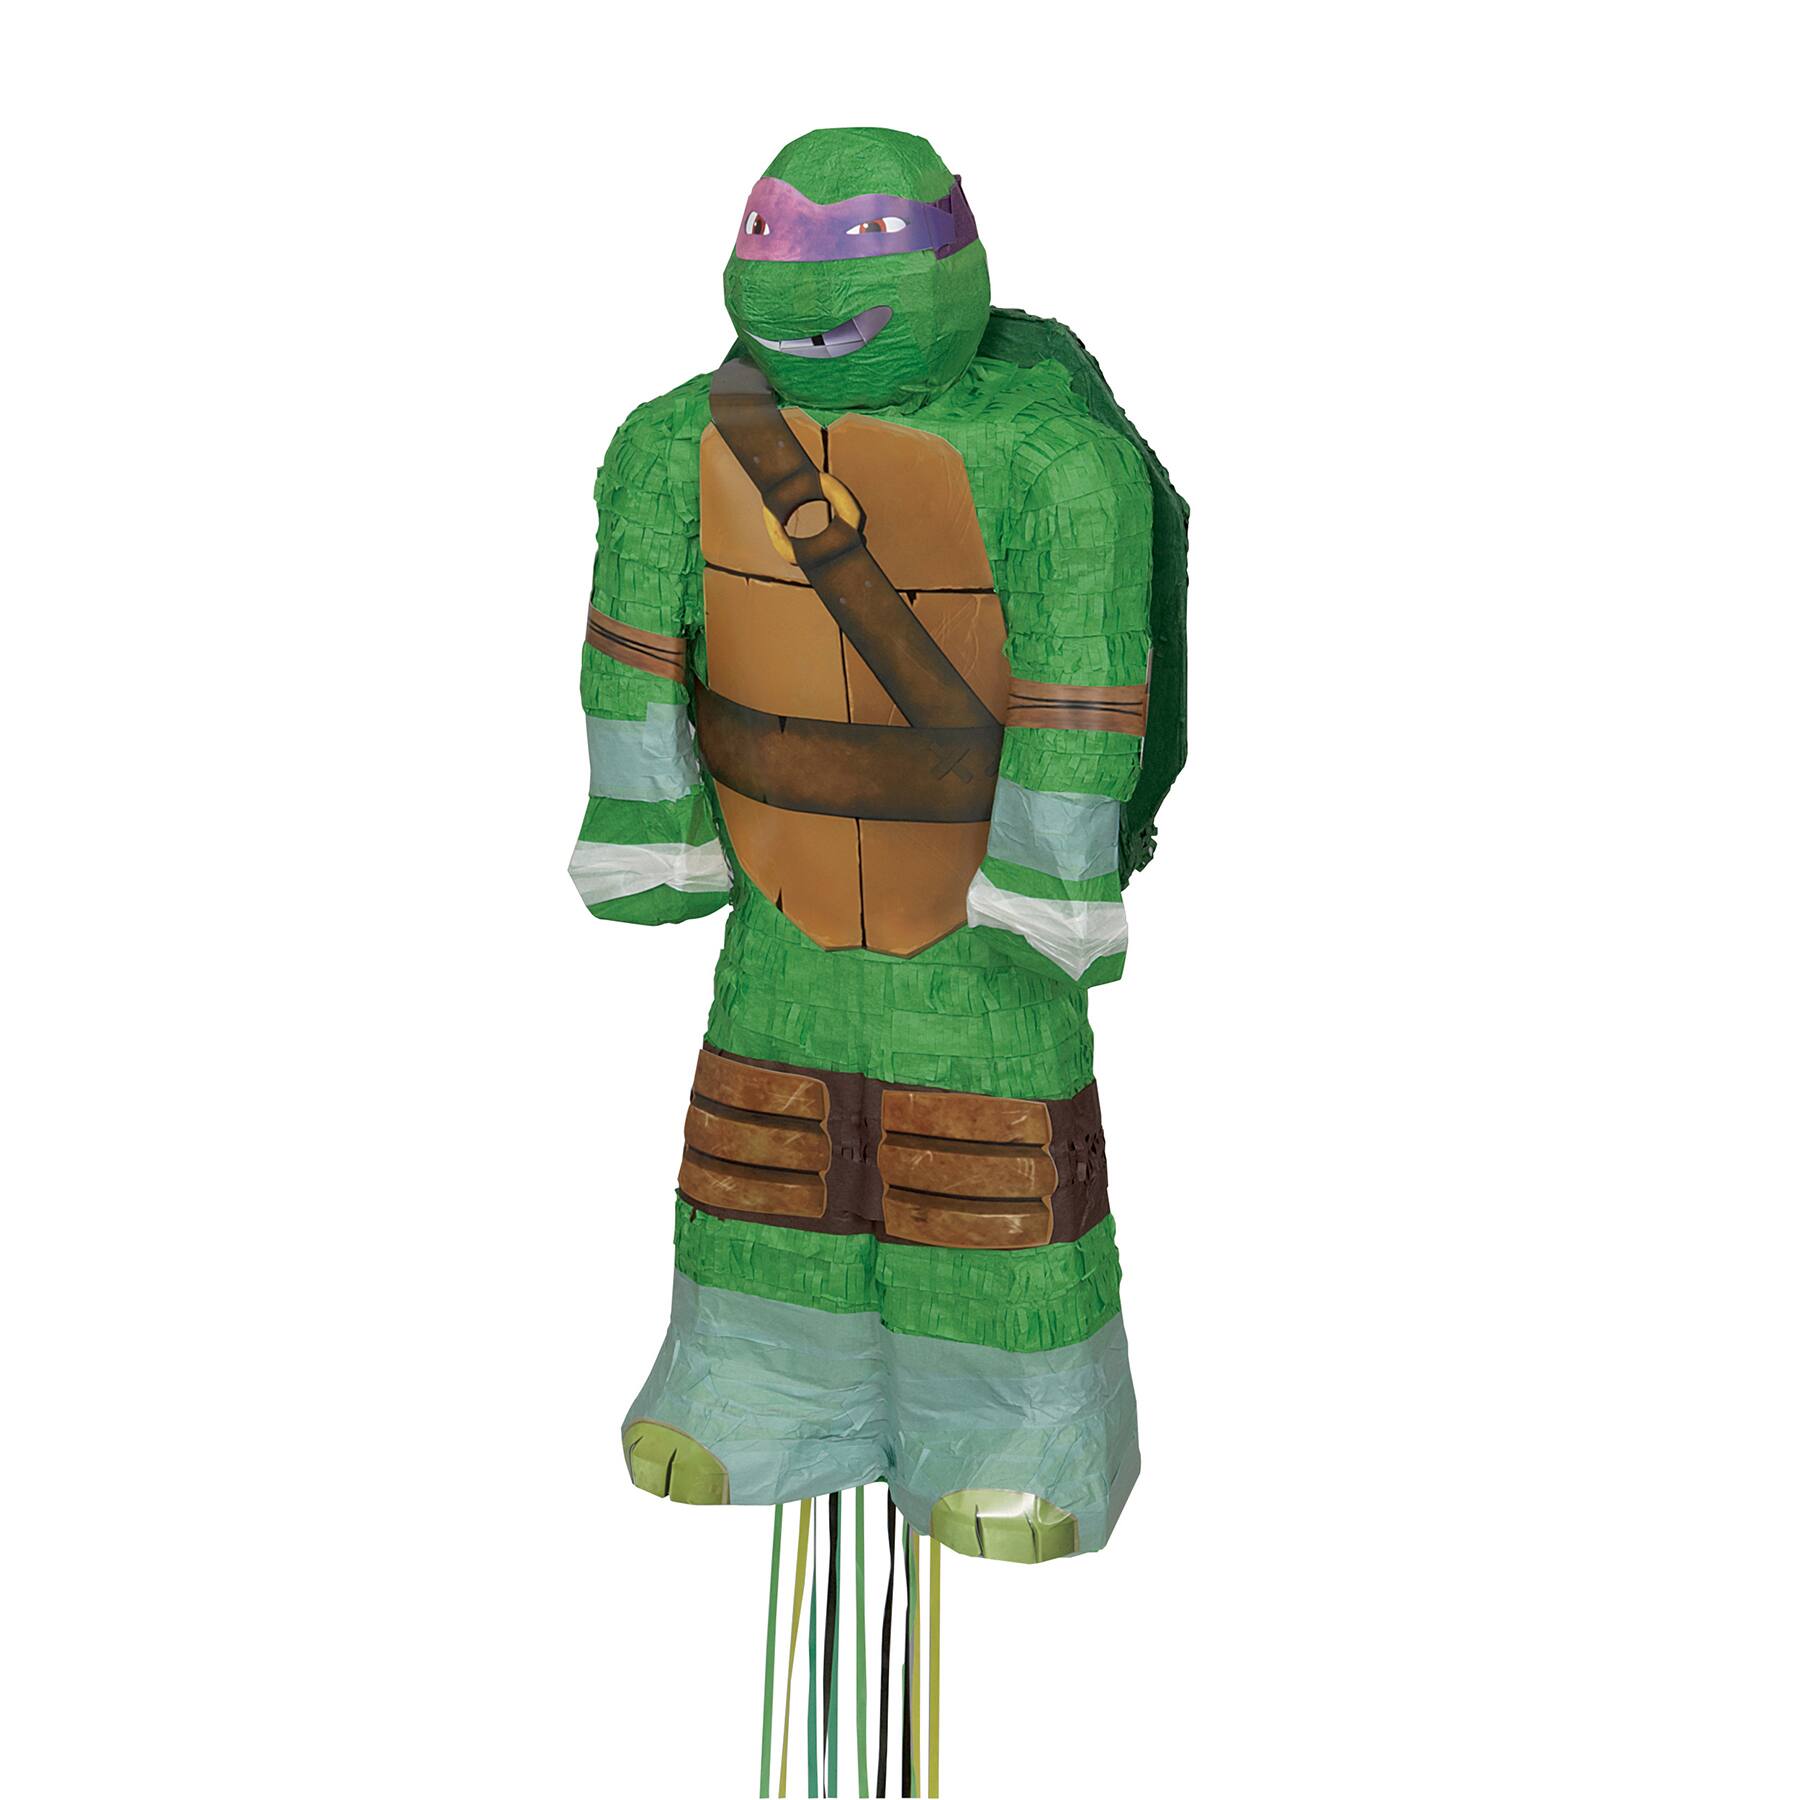 Donatello Teenage Mutant Ninja Turtles Pinata, Pull String